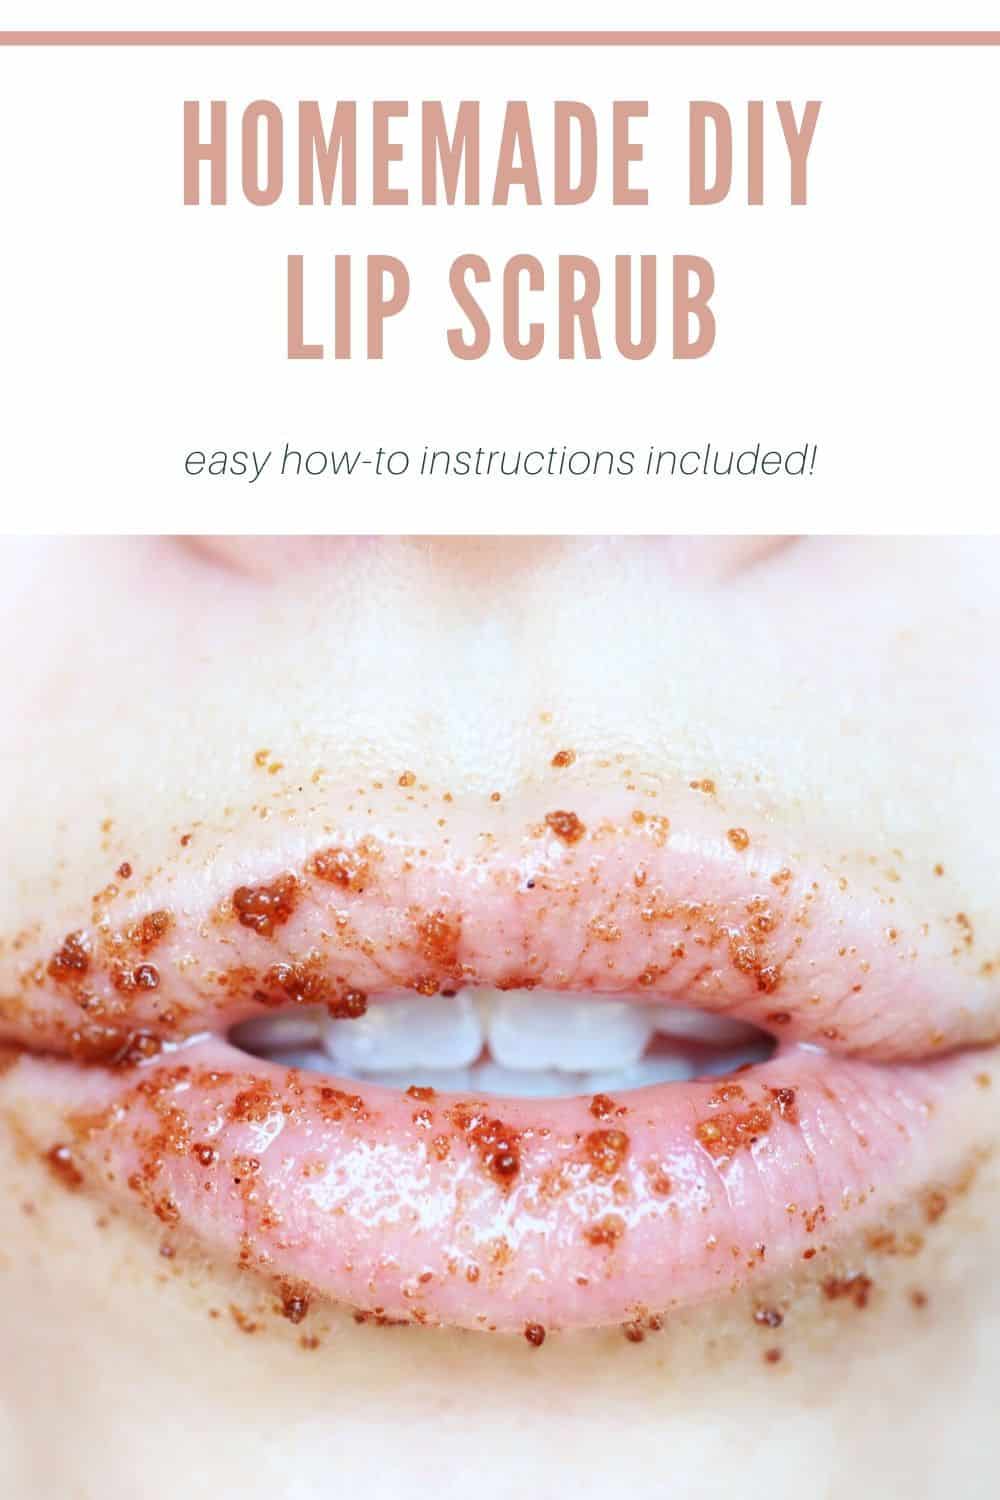 Homemade Diy Lip Scrub | The Toasted Pine Nut